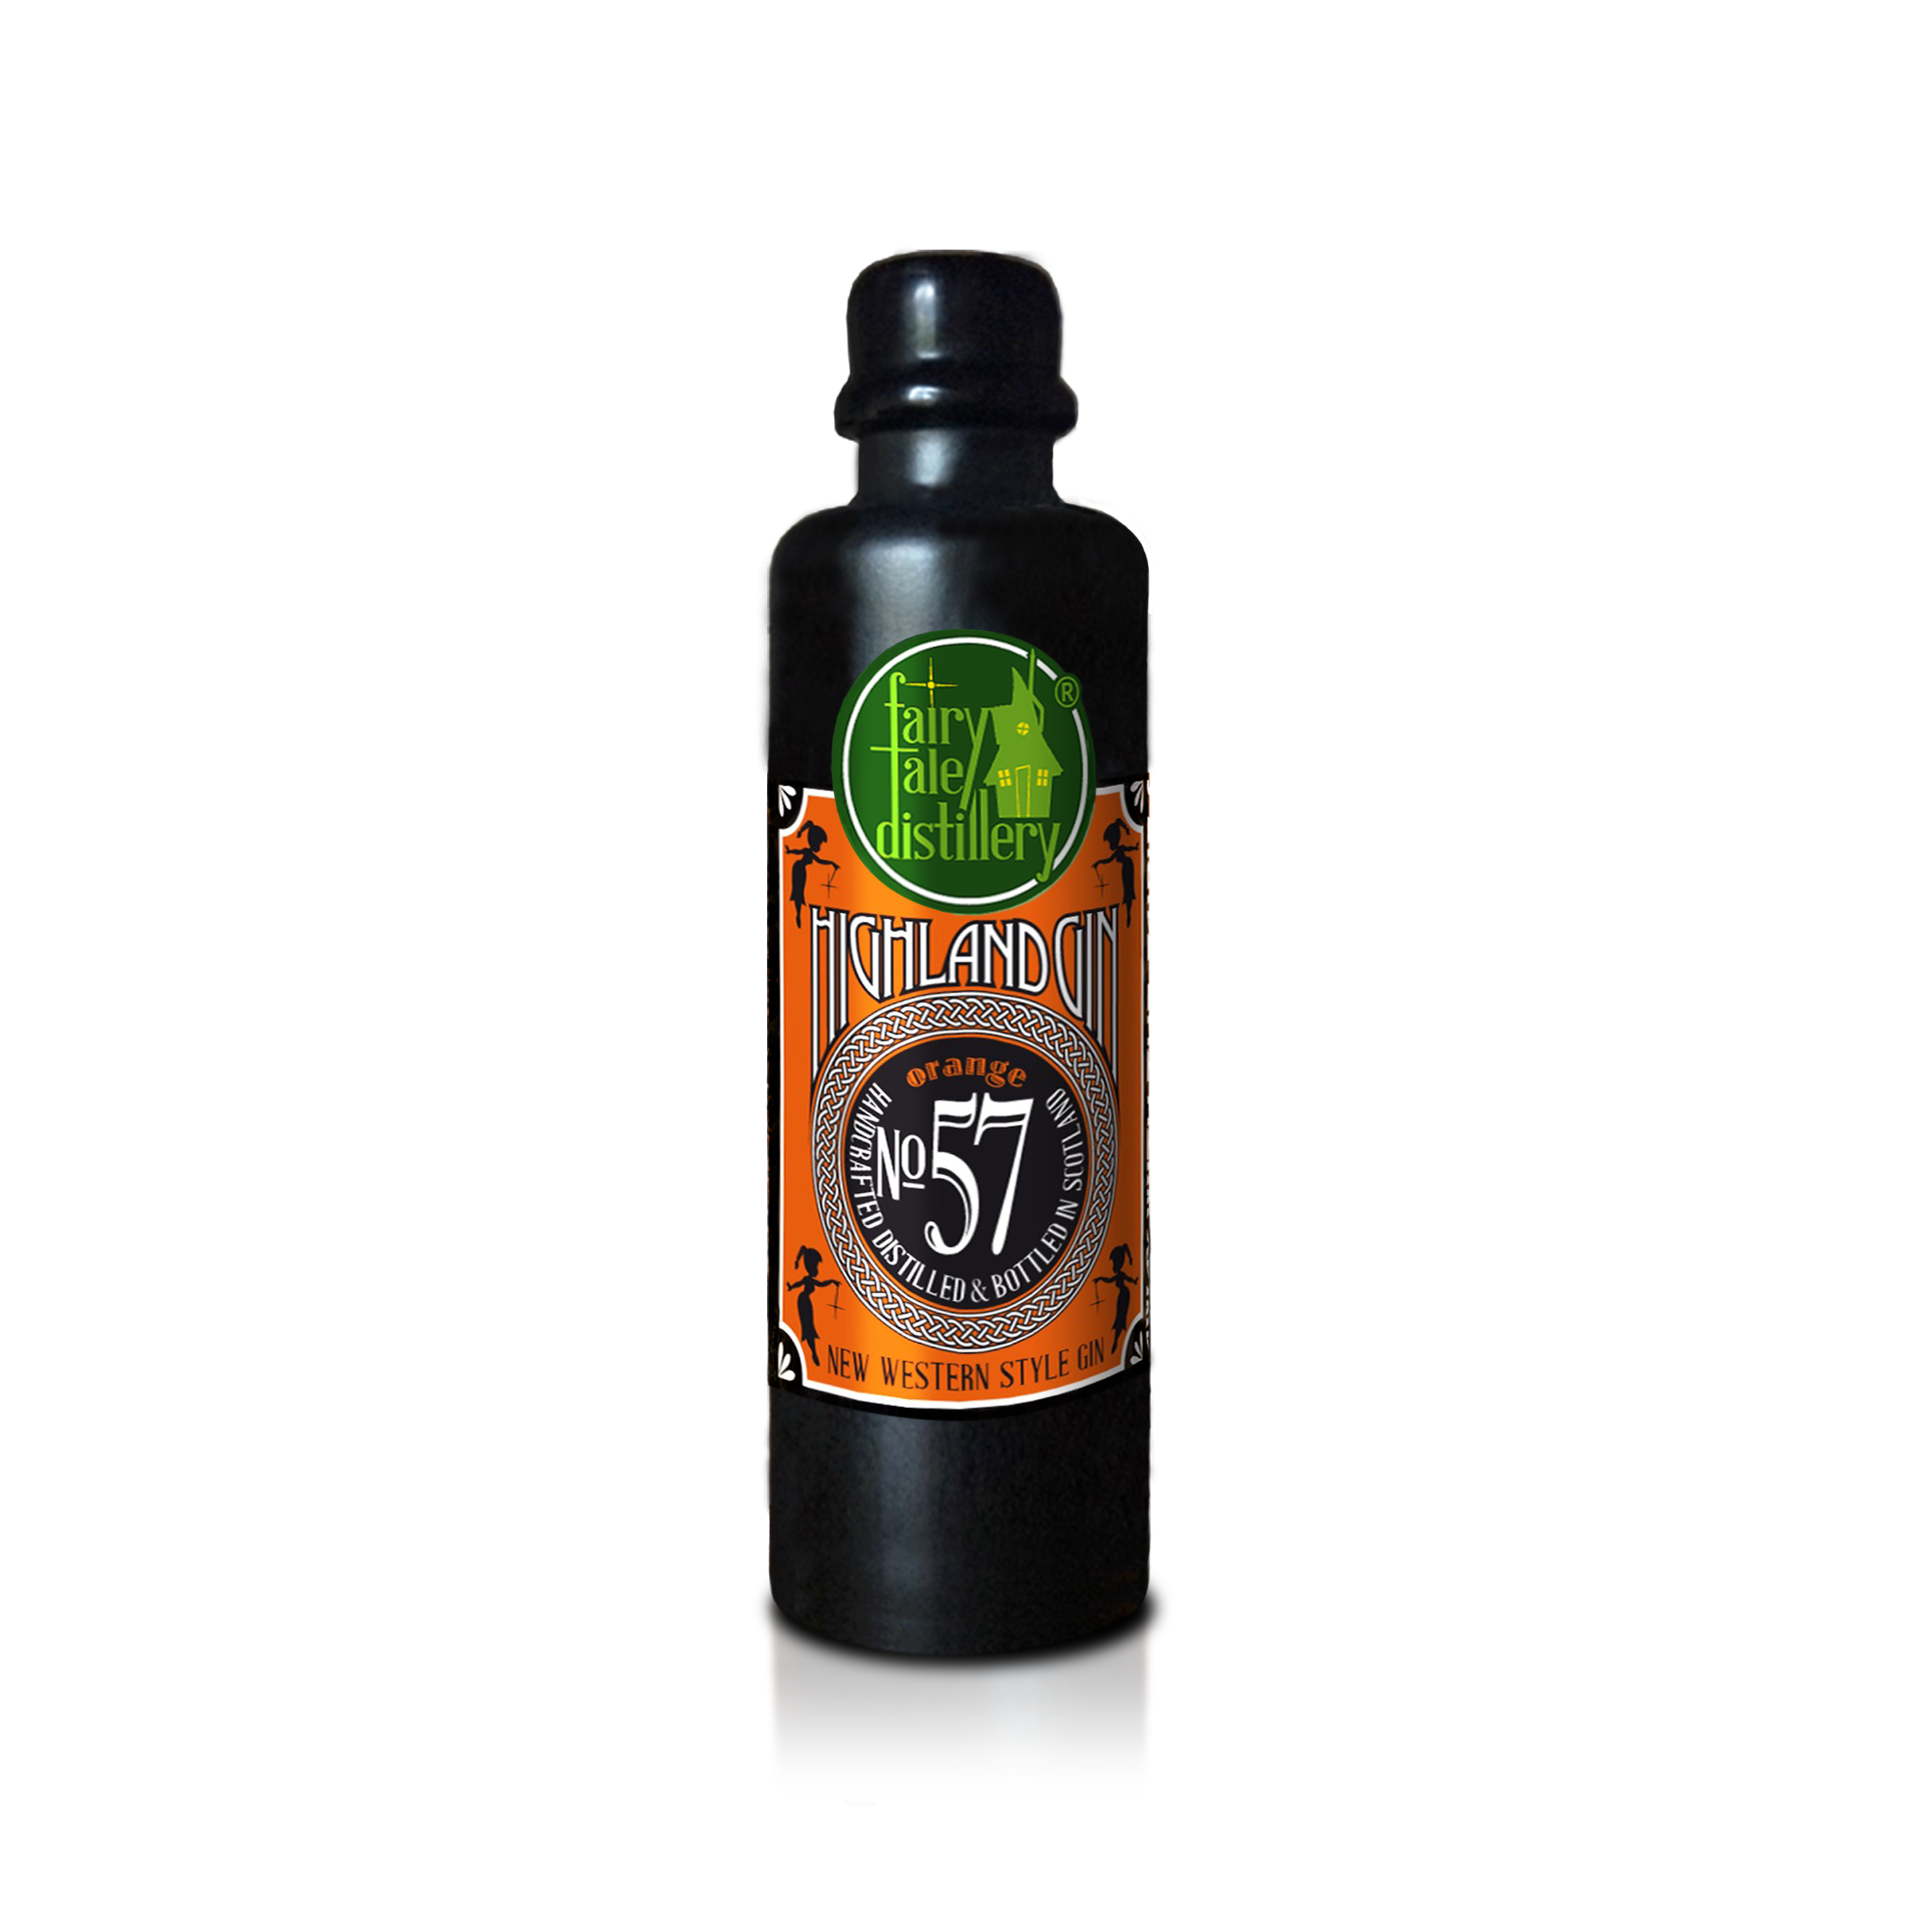 No 57 Orange New Western Style Highland Gin bottle 0,2l from Fairytale Distillery